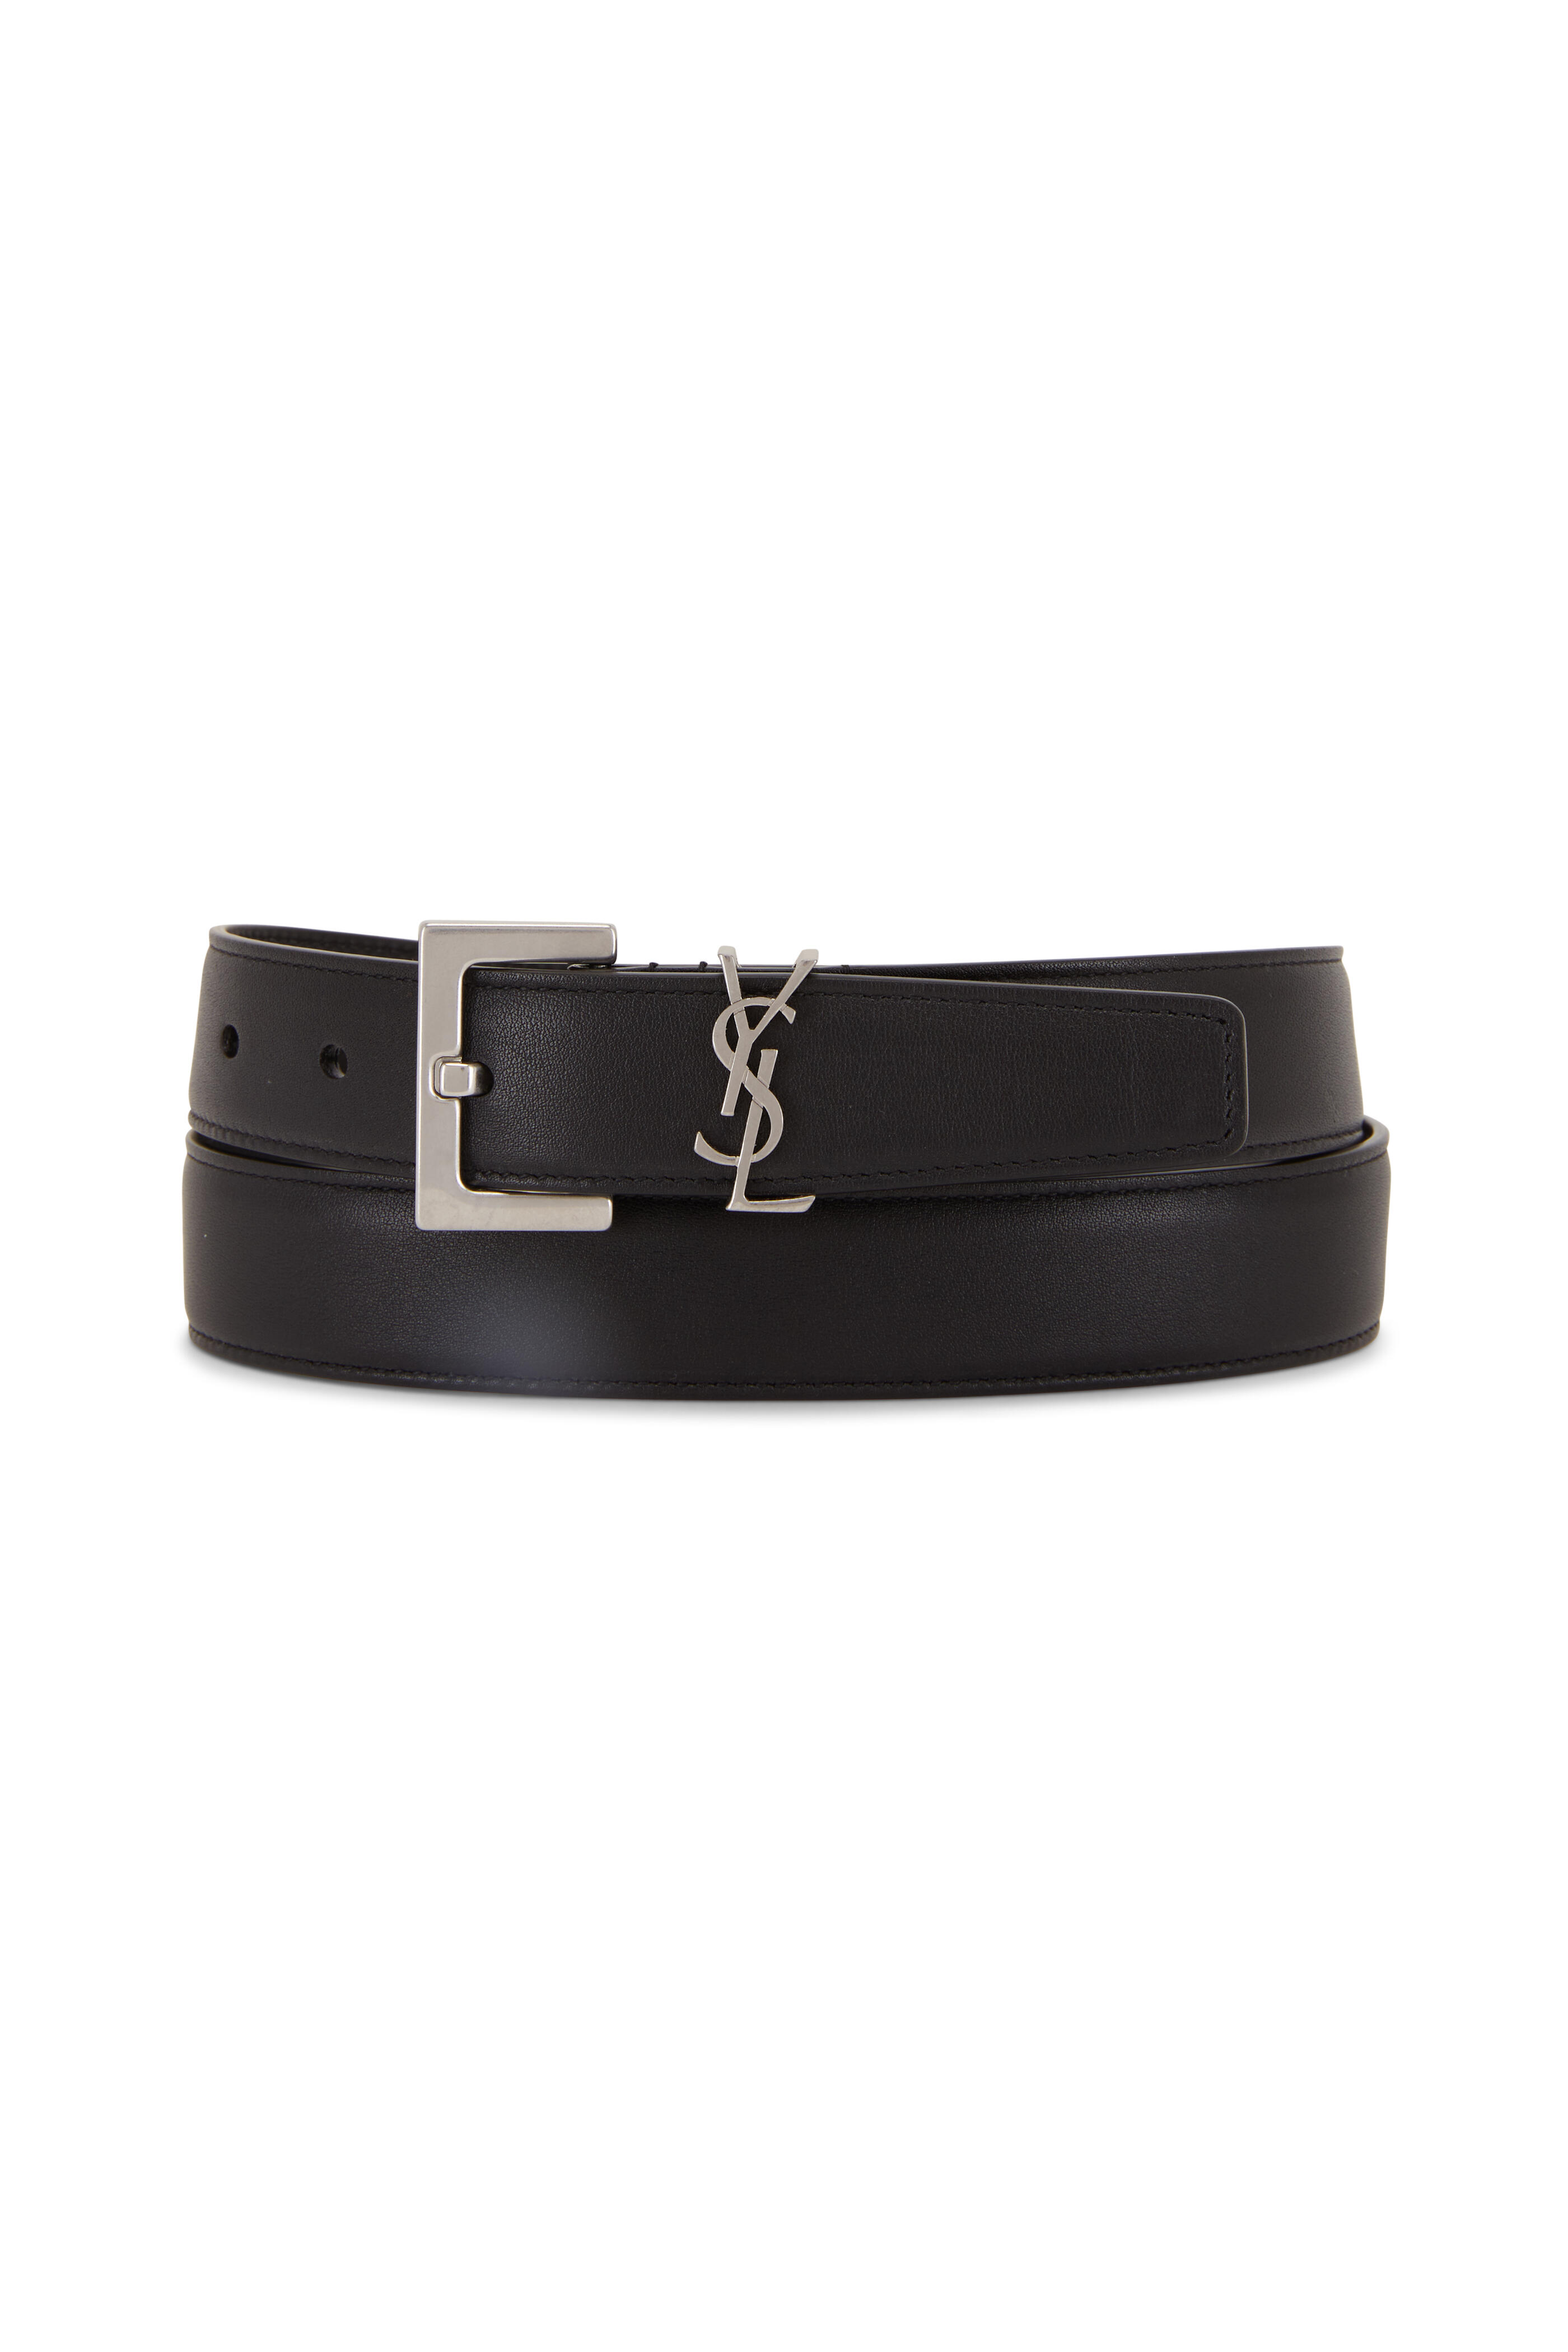 Saint Laurent Golden Ysl Monogram Leather Belt In Black